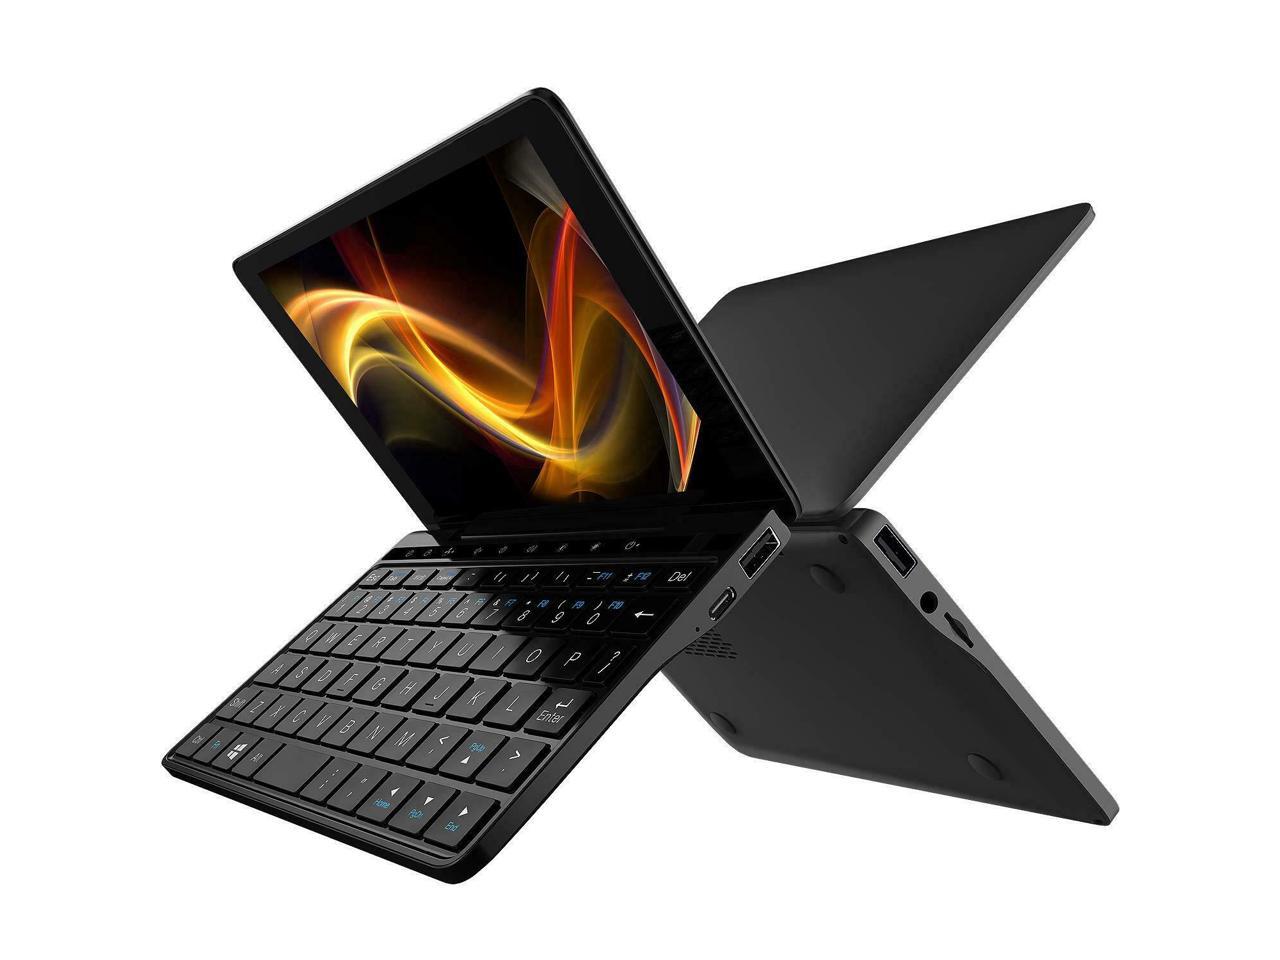 GPD Pocket 2 Mini Portable Laptop UMPC Tablet PC 7 inch Touch Screen Windows 10 3965Y black color